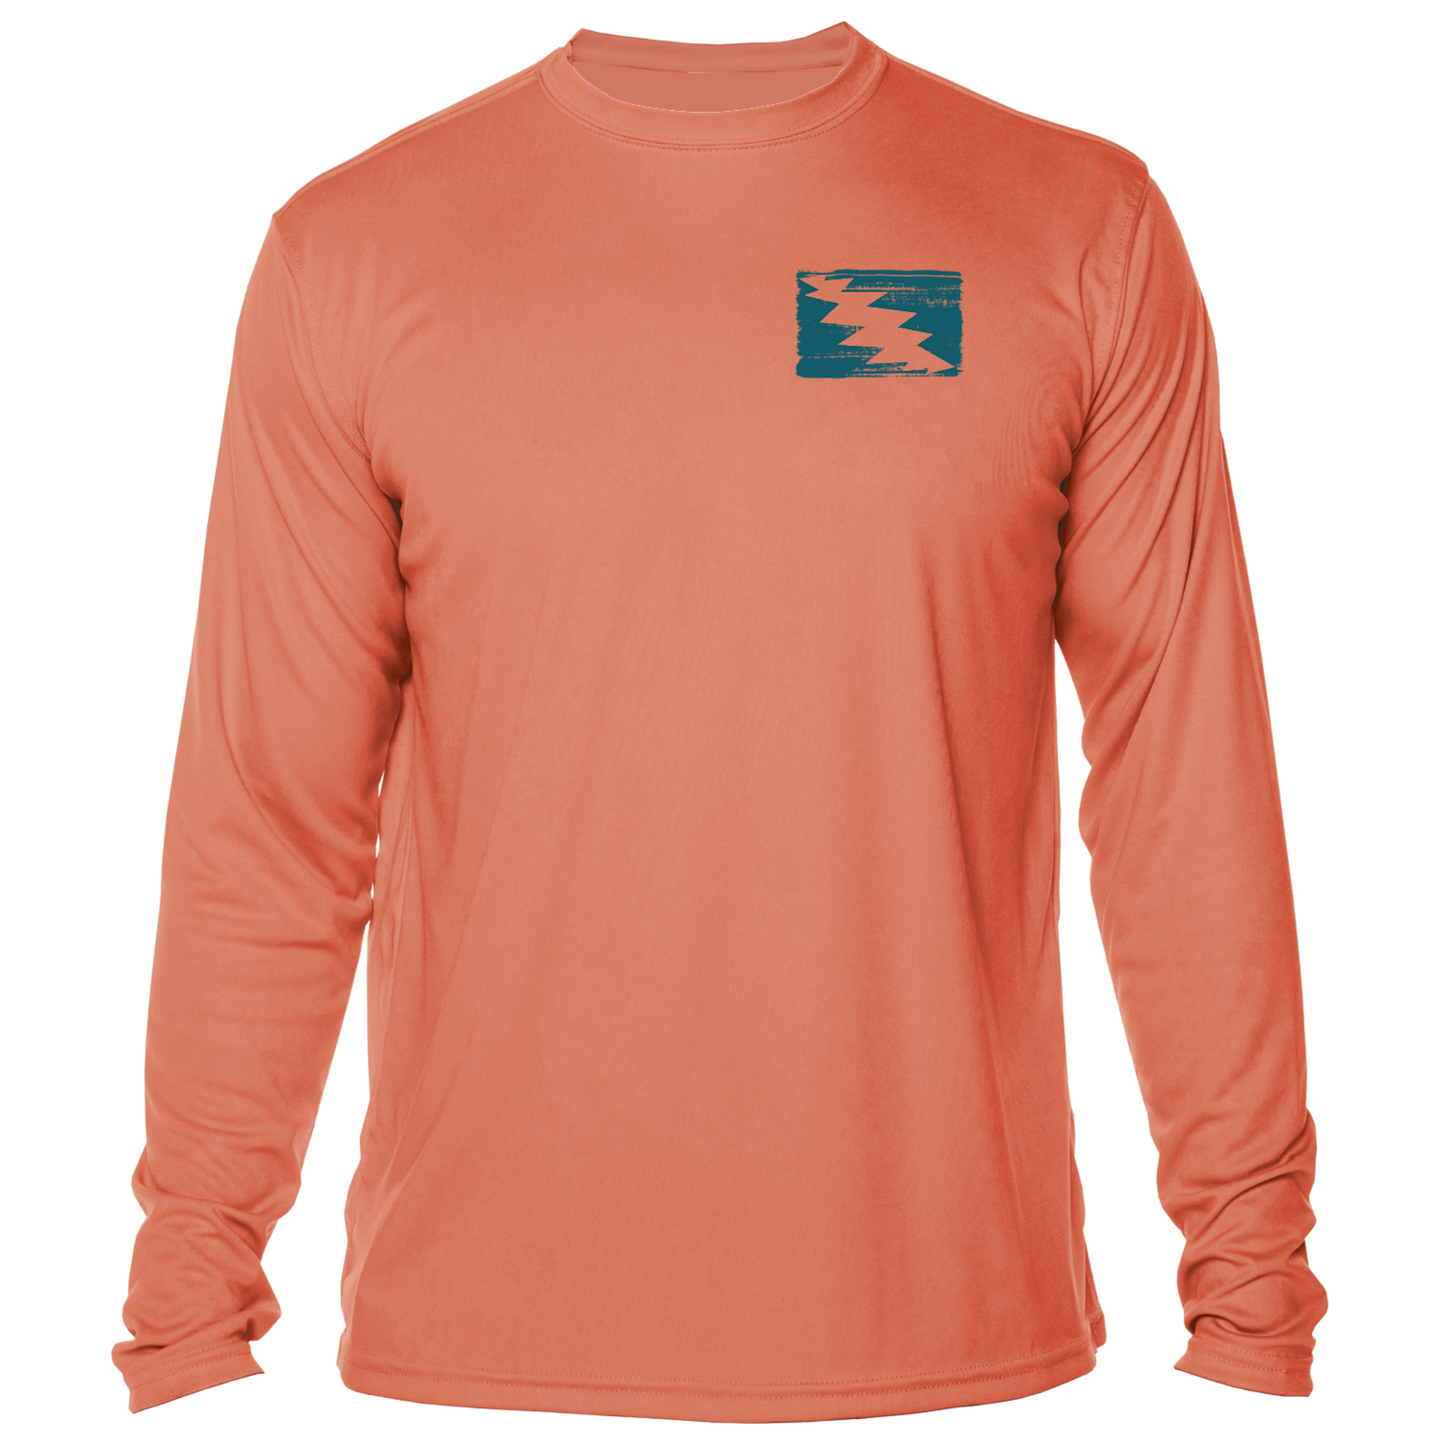 Grateful Diver Dive Tanks UV Shirt in salmon front shot off figure